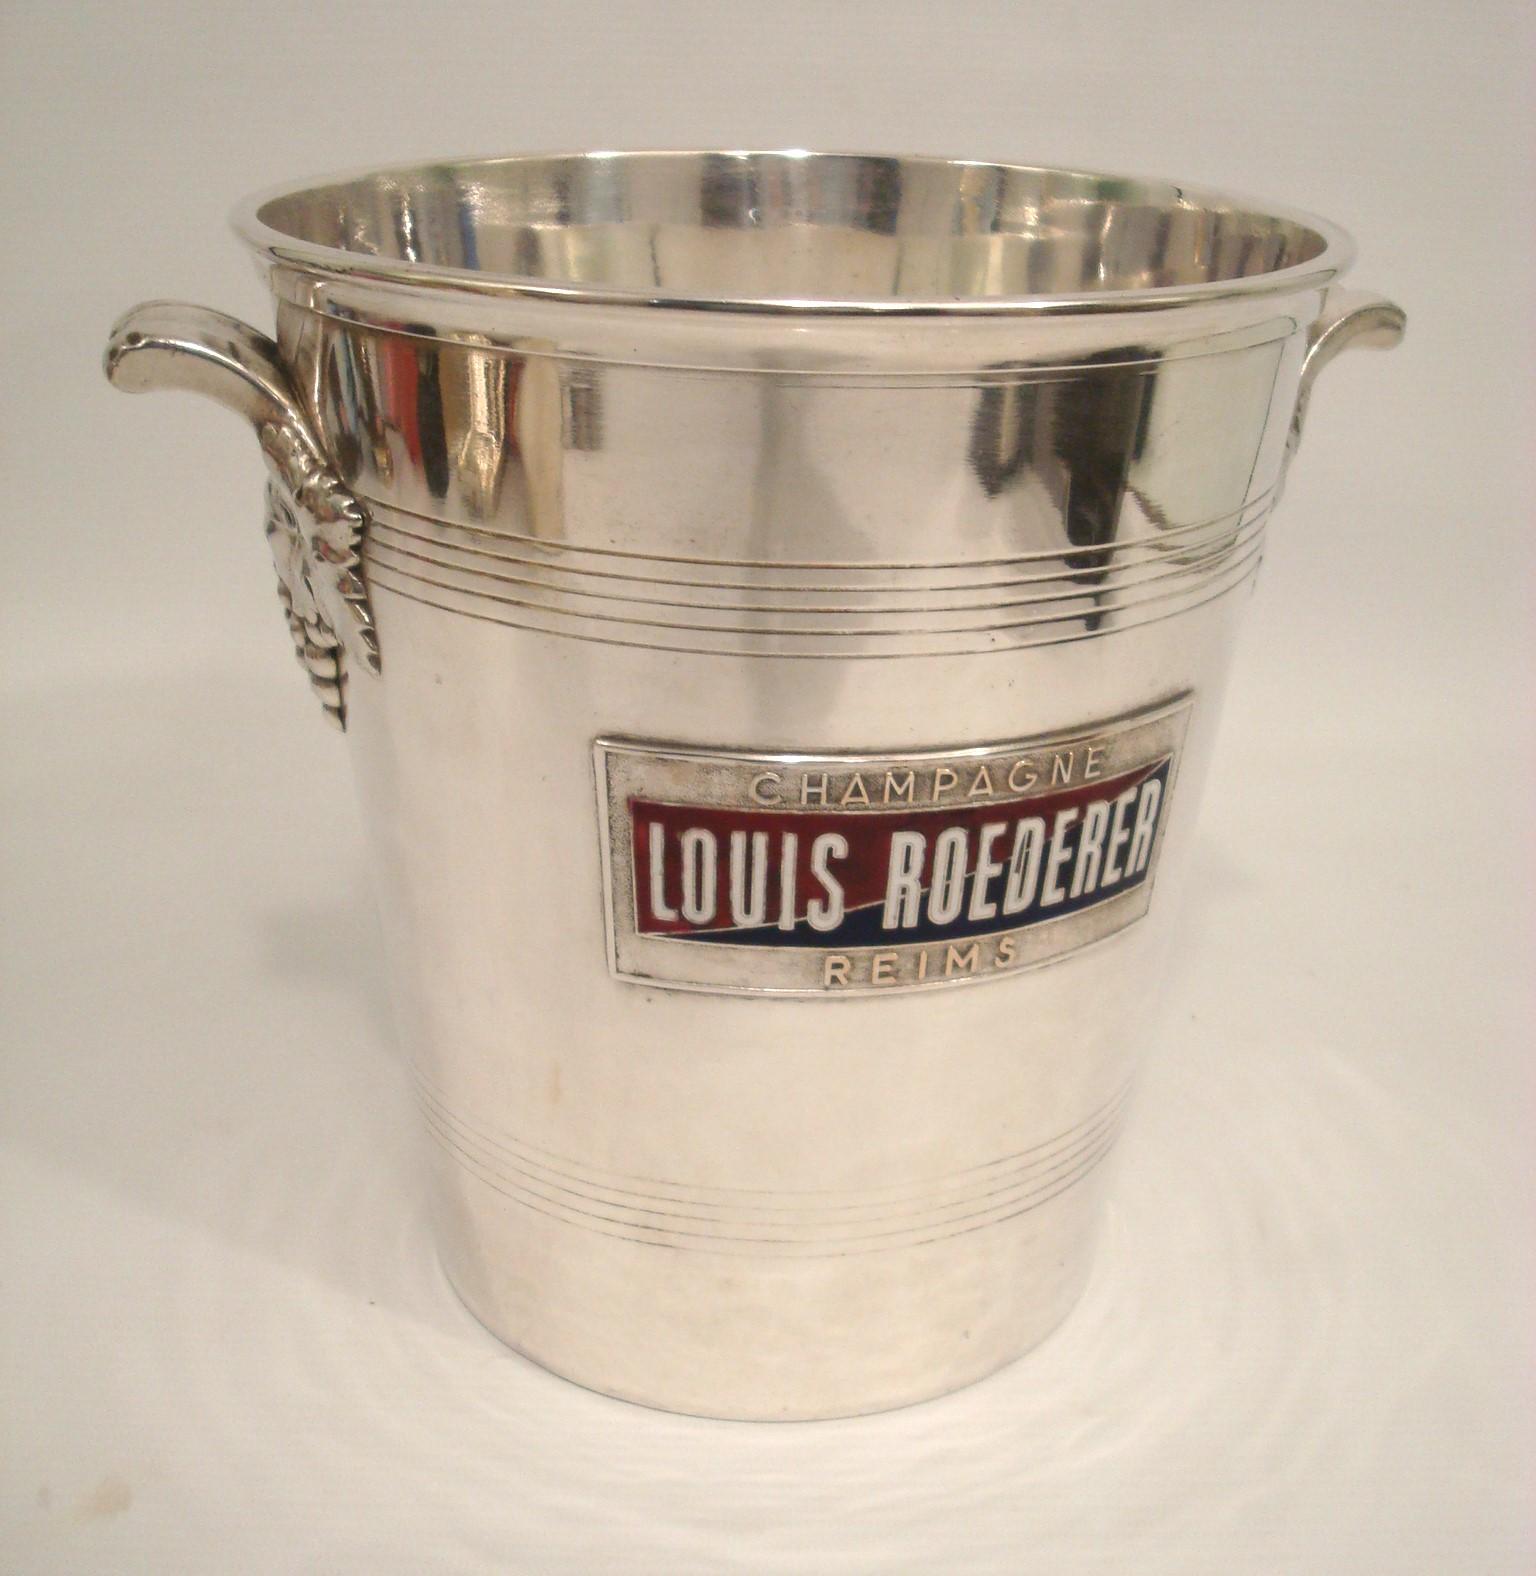 Vintage Mid-Century Louis Roederer Champagne Enamel Cooler  Bucket, Argit France. A vintage brass silvered Louis Roederer Champagne ice bucket. Made in France. Stamped Argit Made in France.
Louis Roederer is a producer of champagne based in Reims,